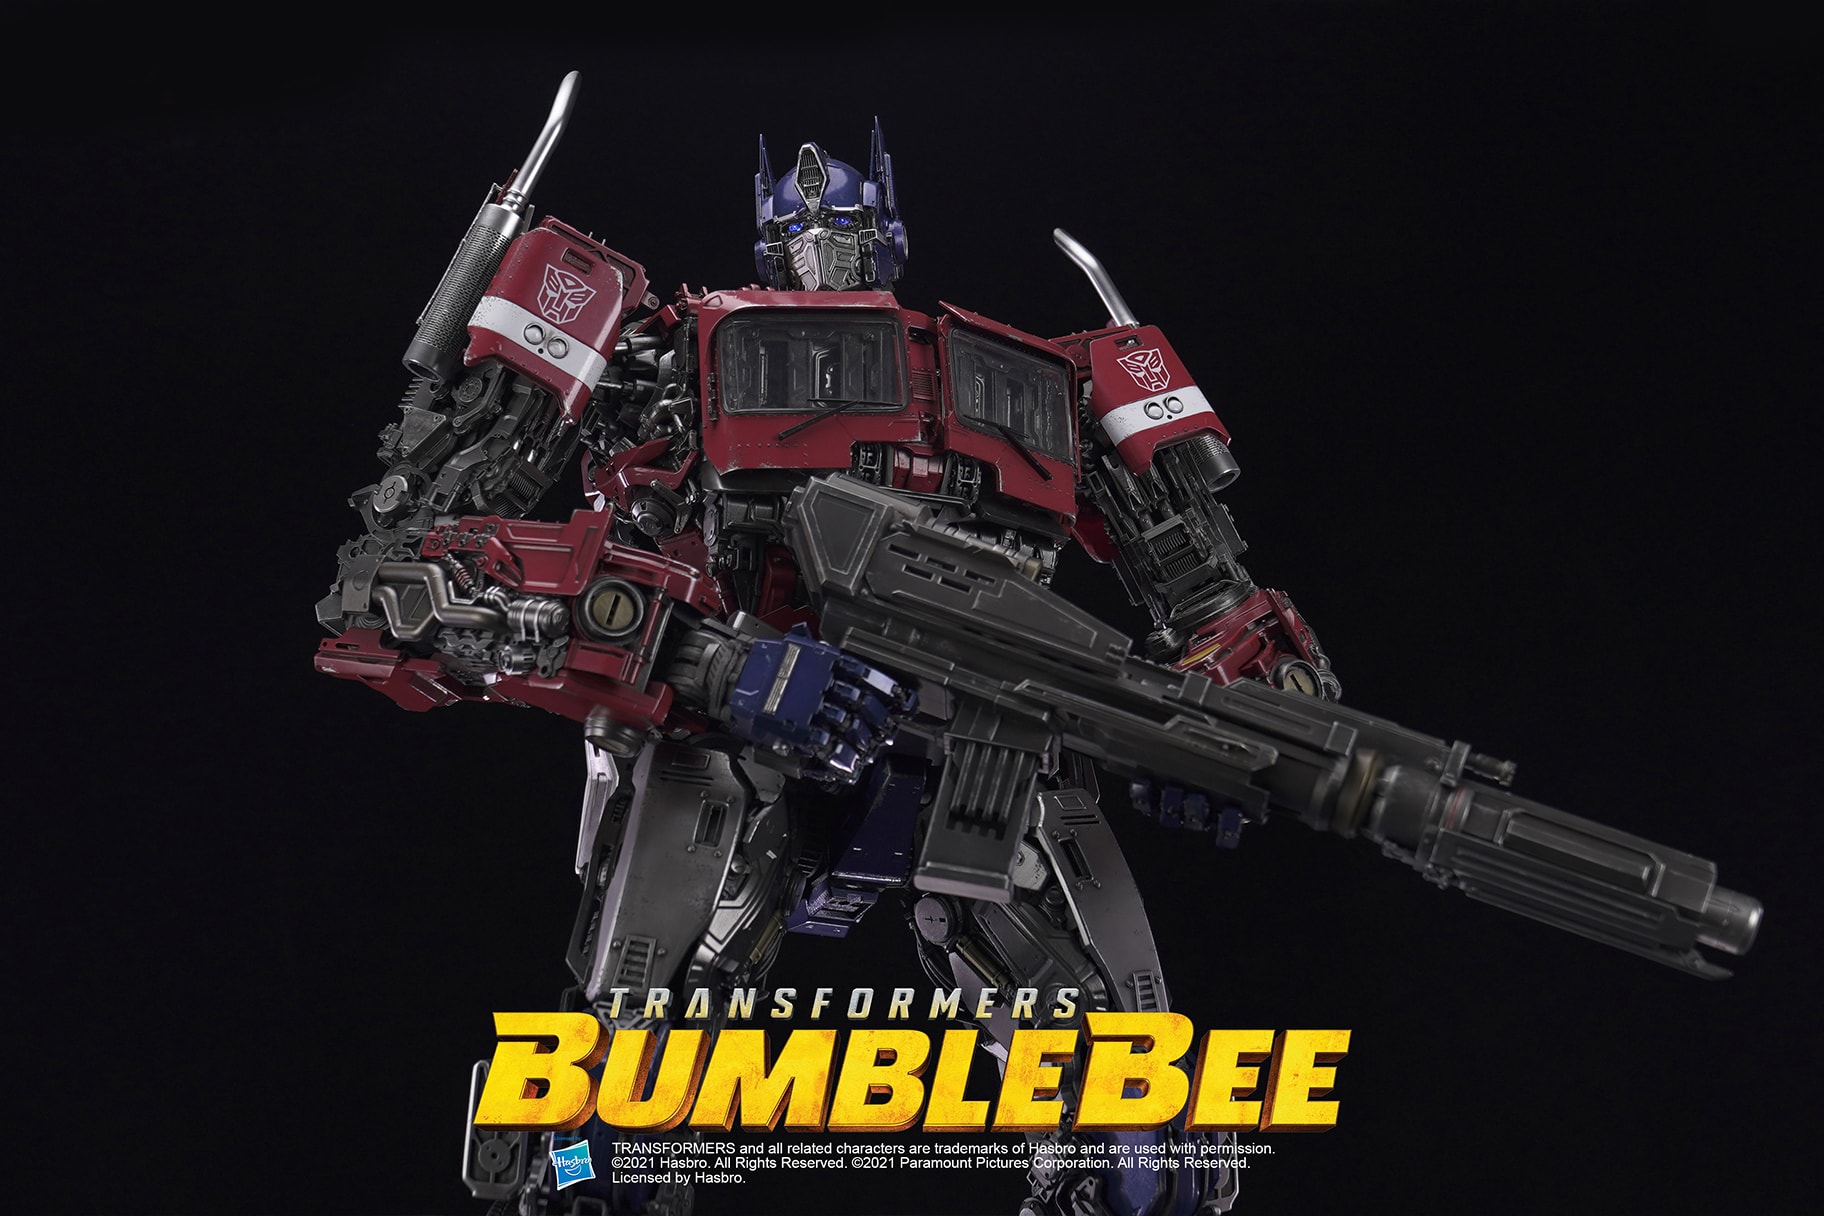 yolopark IIES Series 62cm Optimus Prime transformers Bumblebee the Movie figure release toys figures HK ACG22 